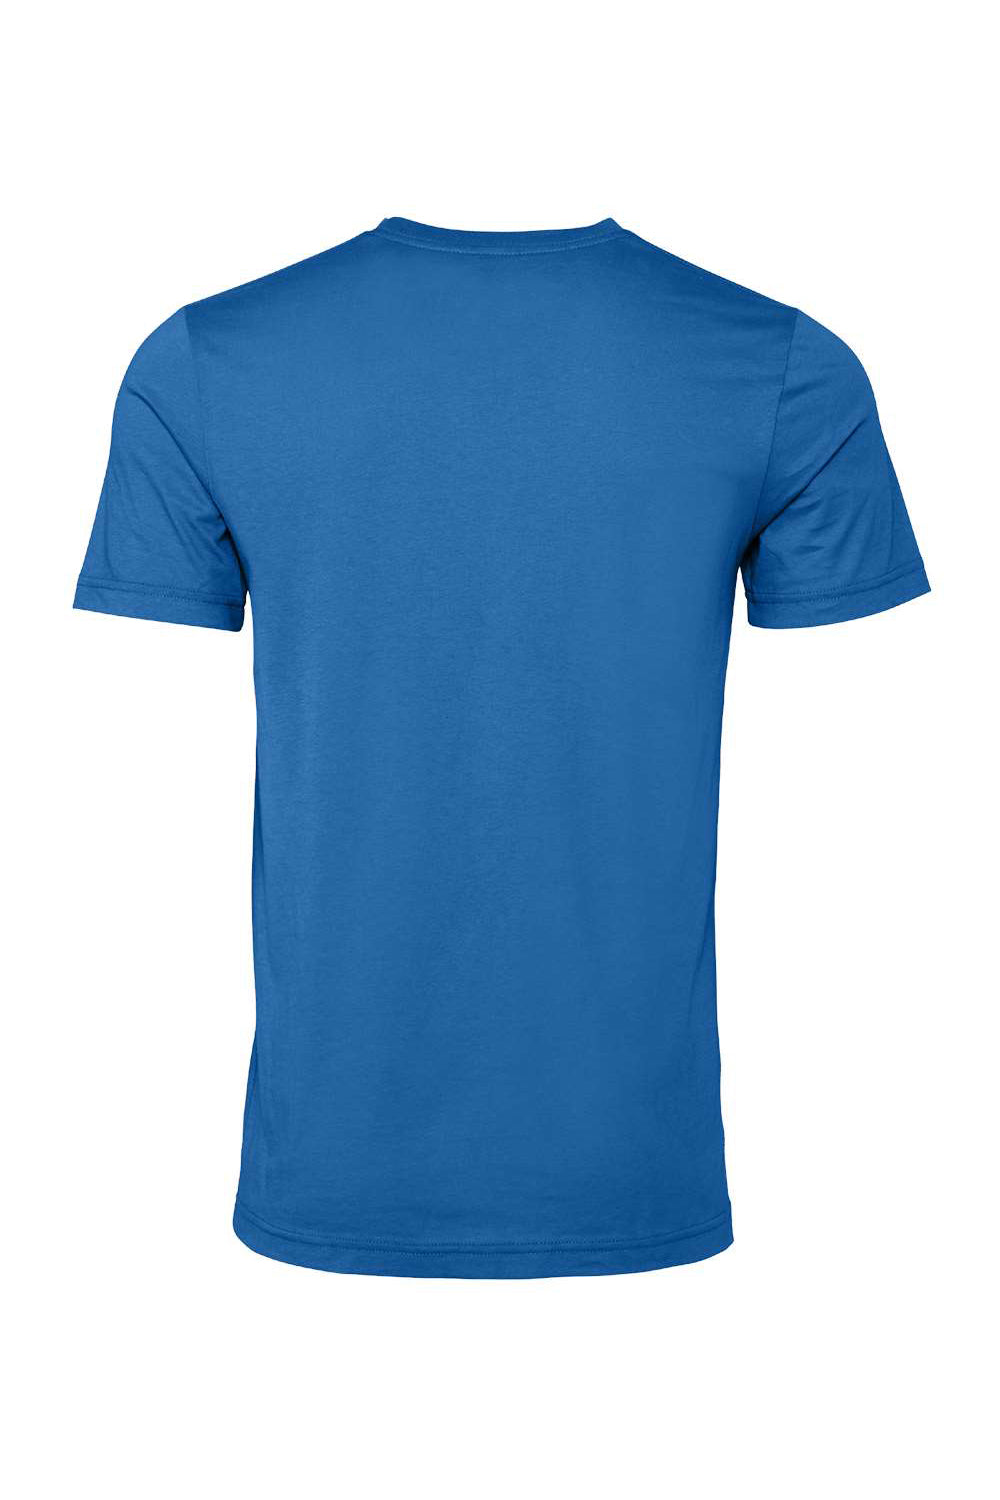 Bella + Canvas BC3001/3001C Mens Jersey Short Sleeve Crewneck T-Shirt Columbia Blue Flat Back